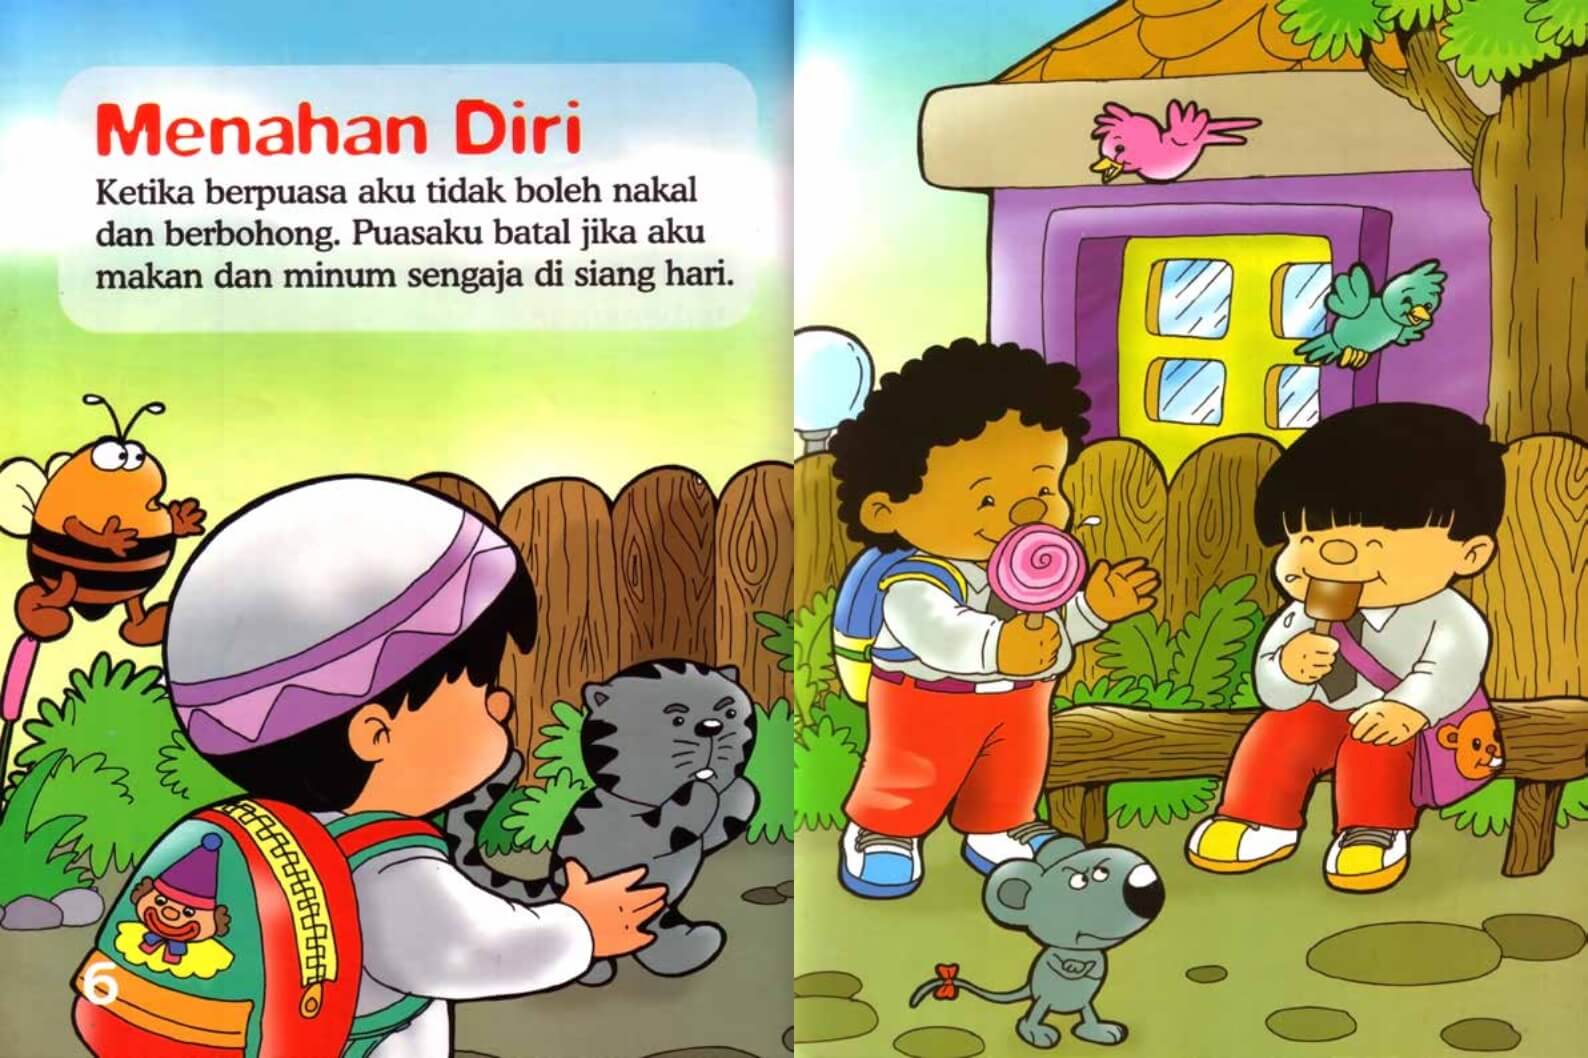 Ebook Seri Fikih Anak, Asyiknya Aku Puasa Ramadhan, Menahan Diri (4)